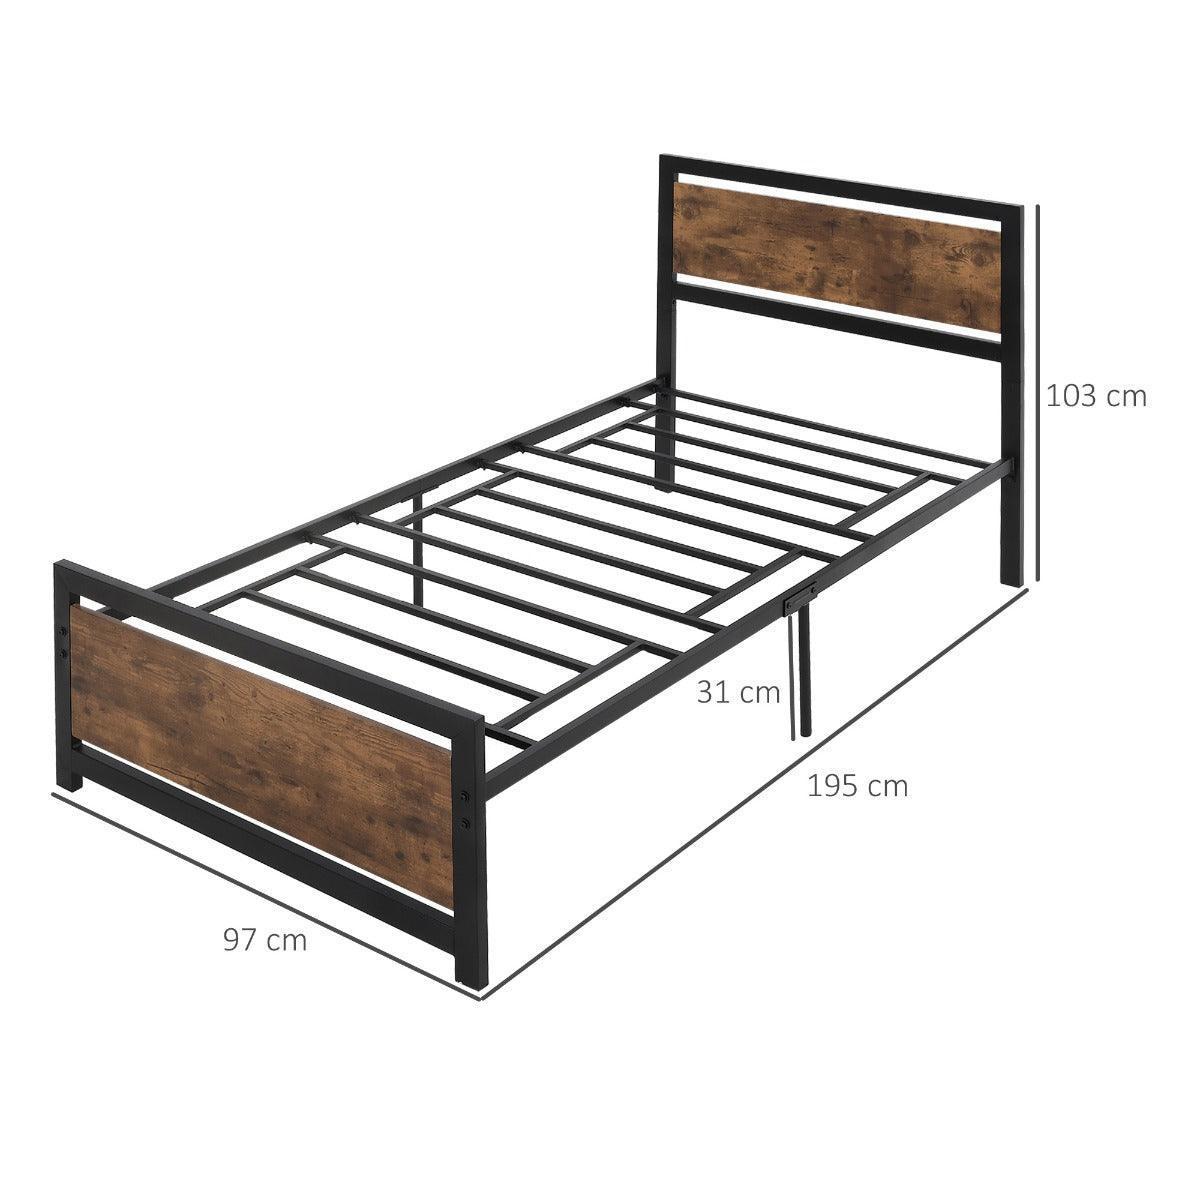 HOMCOM Metal Bed Frame with Underbed Storage - ALL4U RETAILER LTD